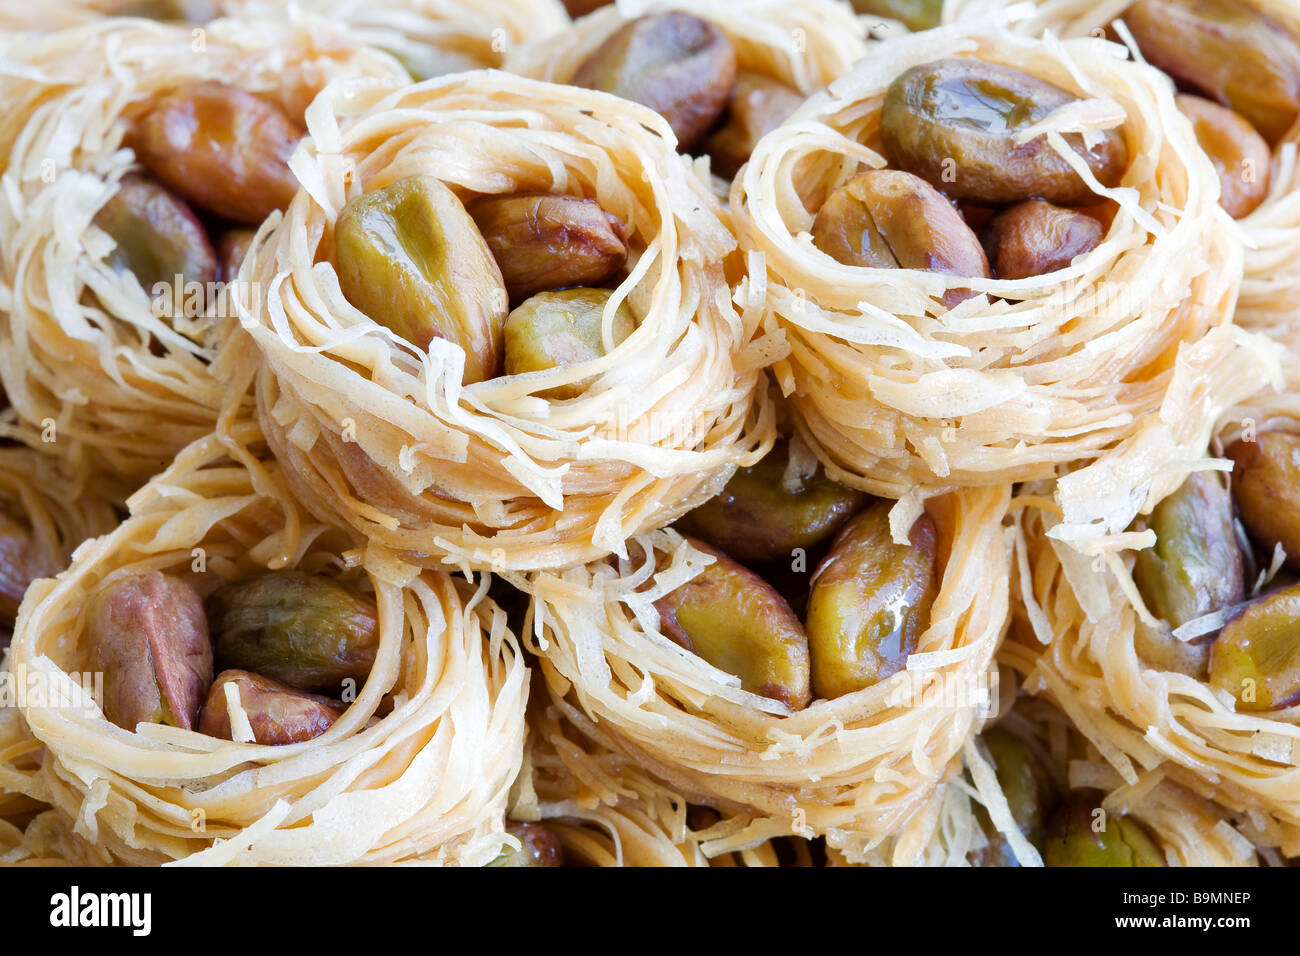 United Arab Emirates, Dubai, Middle-Eastern pastries pistachio based Stock Photo